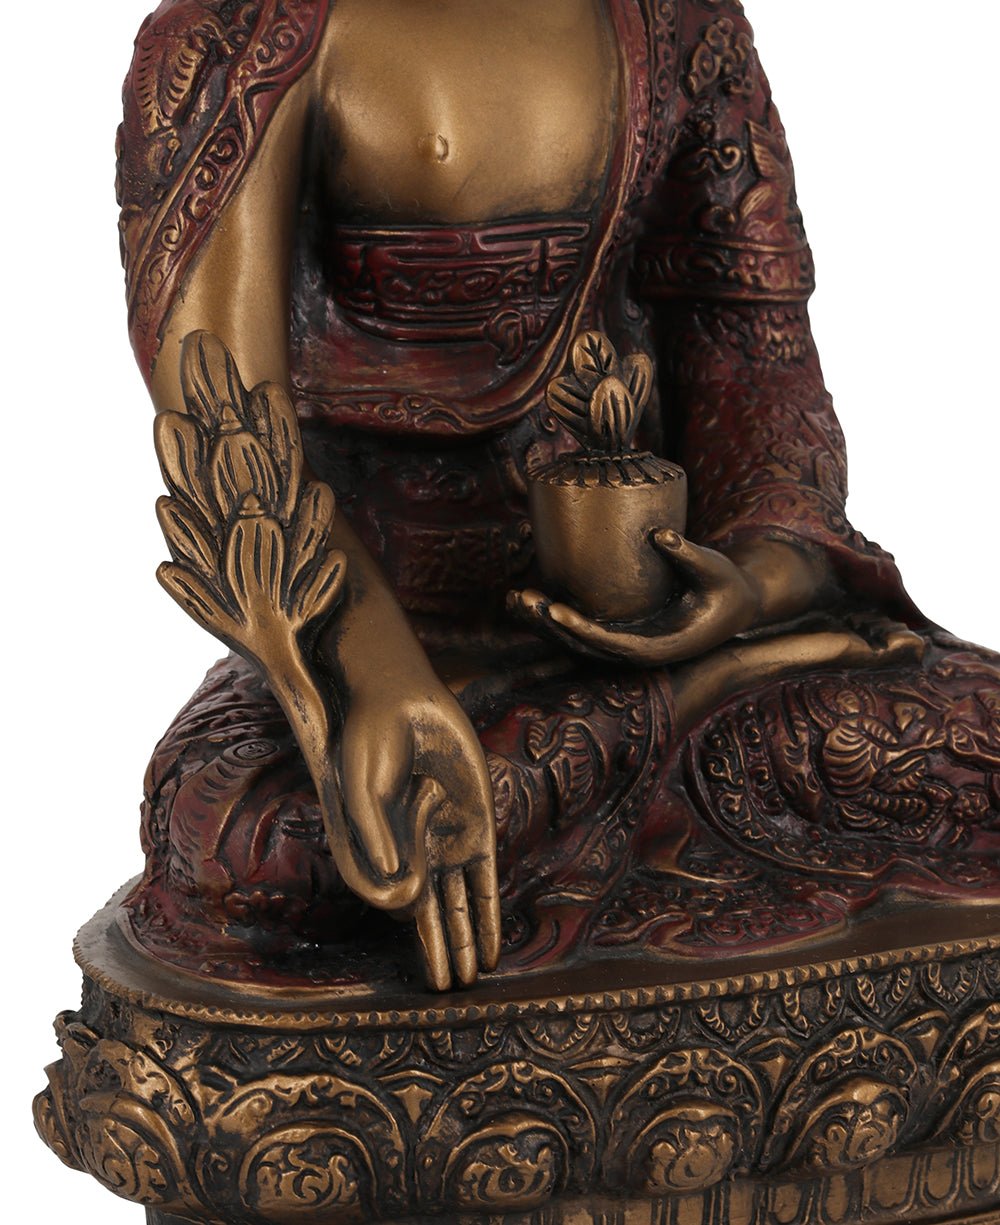 Detailed Medicine Buddha Statue - Sculptures & Statues